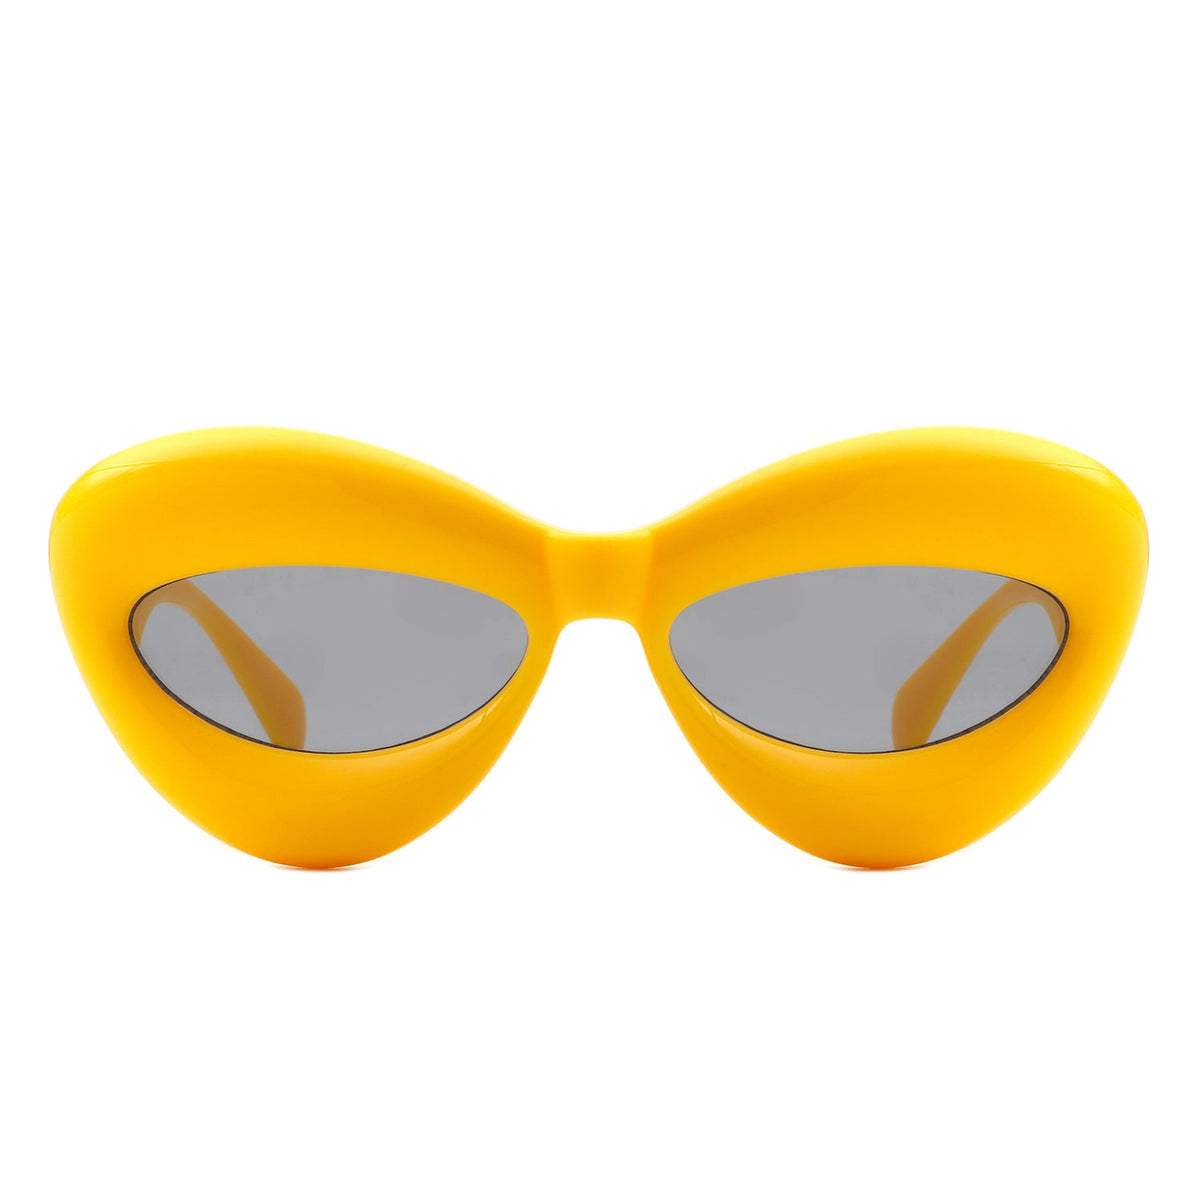 S1208-1 - Oversize Irregular Lips Shape Thick Frame Fashion Women Sunglasses